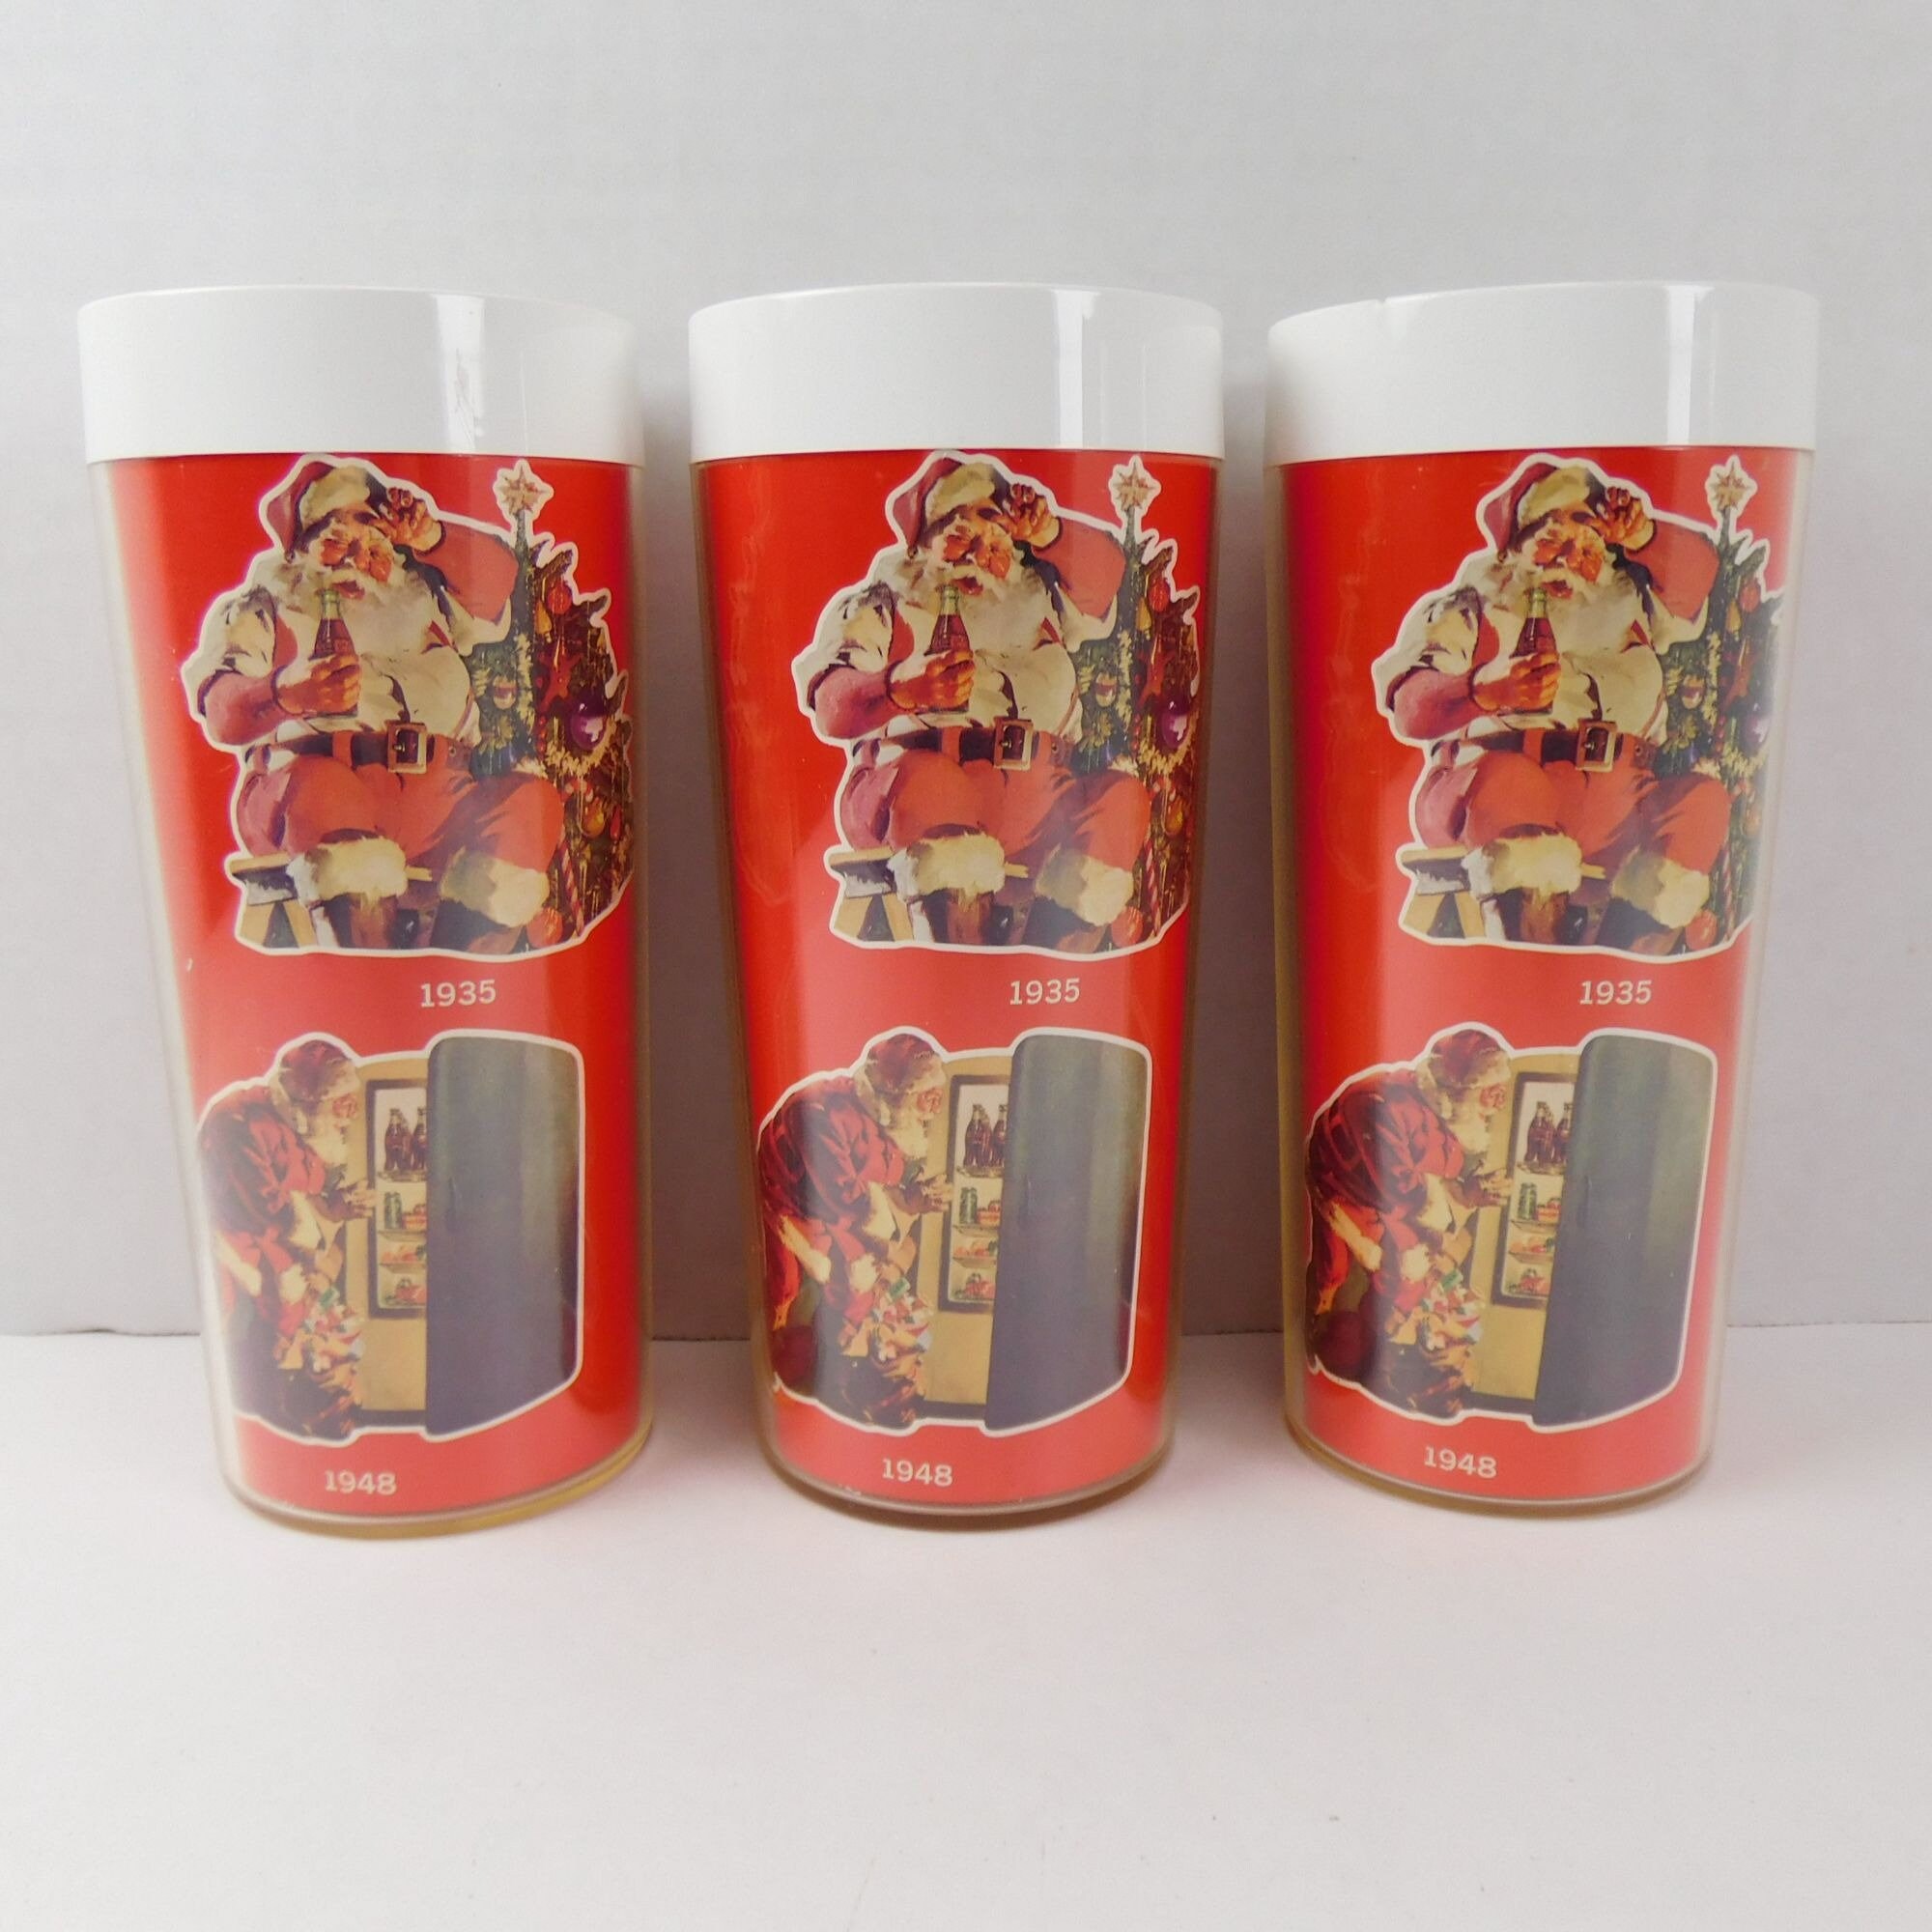 GET 6616-RC 16 oz. Red Coca-Cola® SAN Plastic Pebbled Tumbler - 72/Case